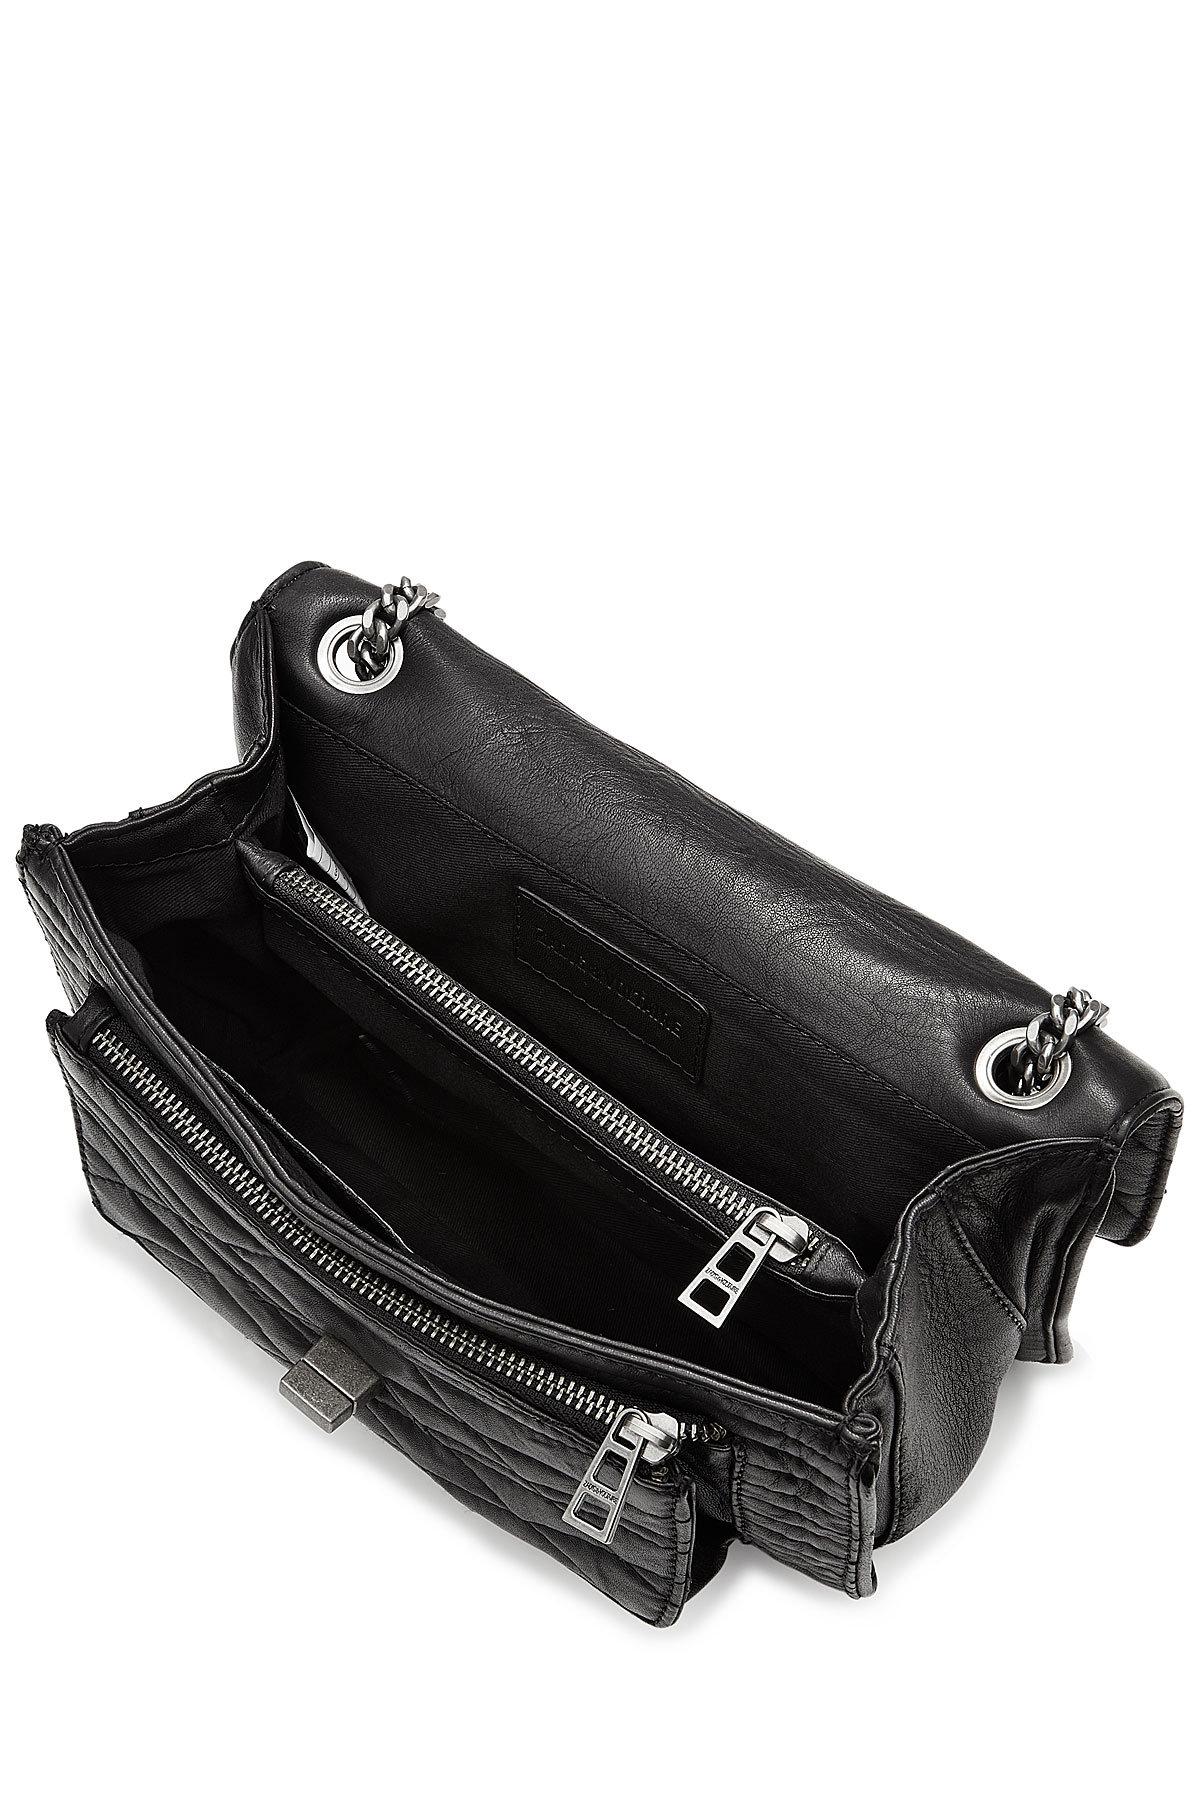 Zadig & voltaire Quilted Leather Shoulder Bag in Black | Lyst